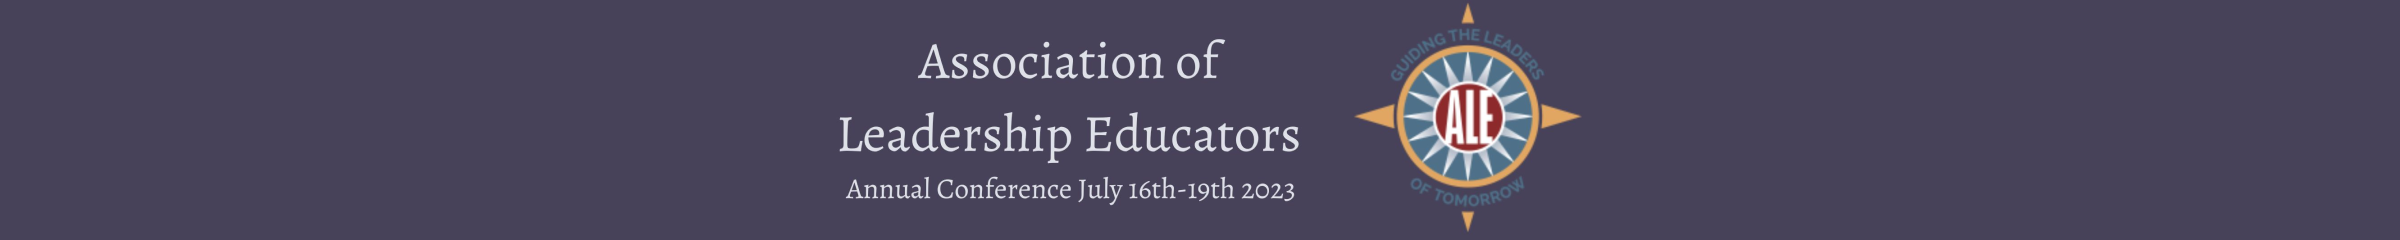 Association of Leadership Educators logo